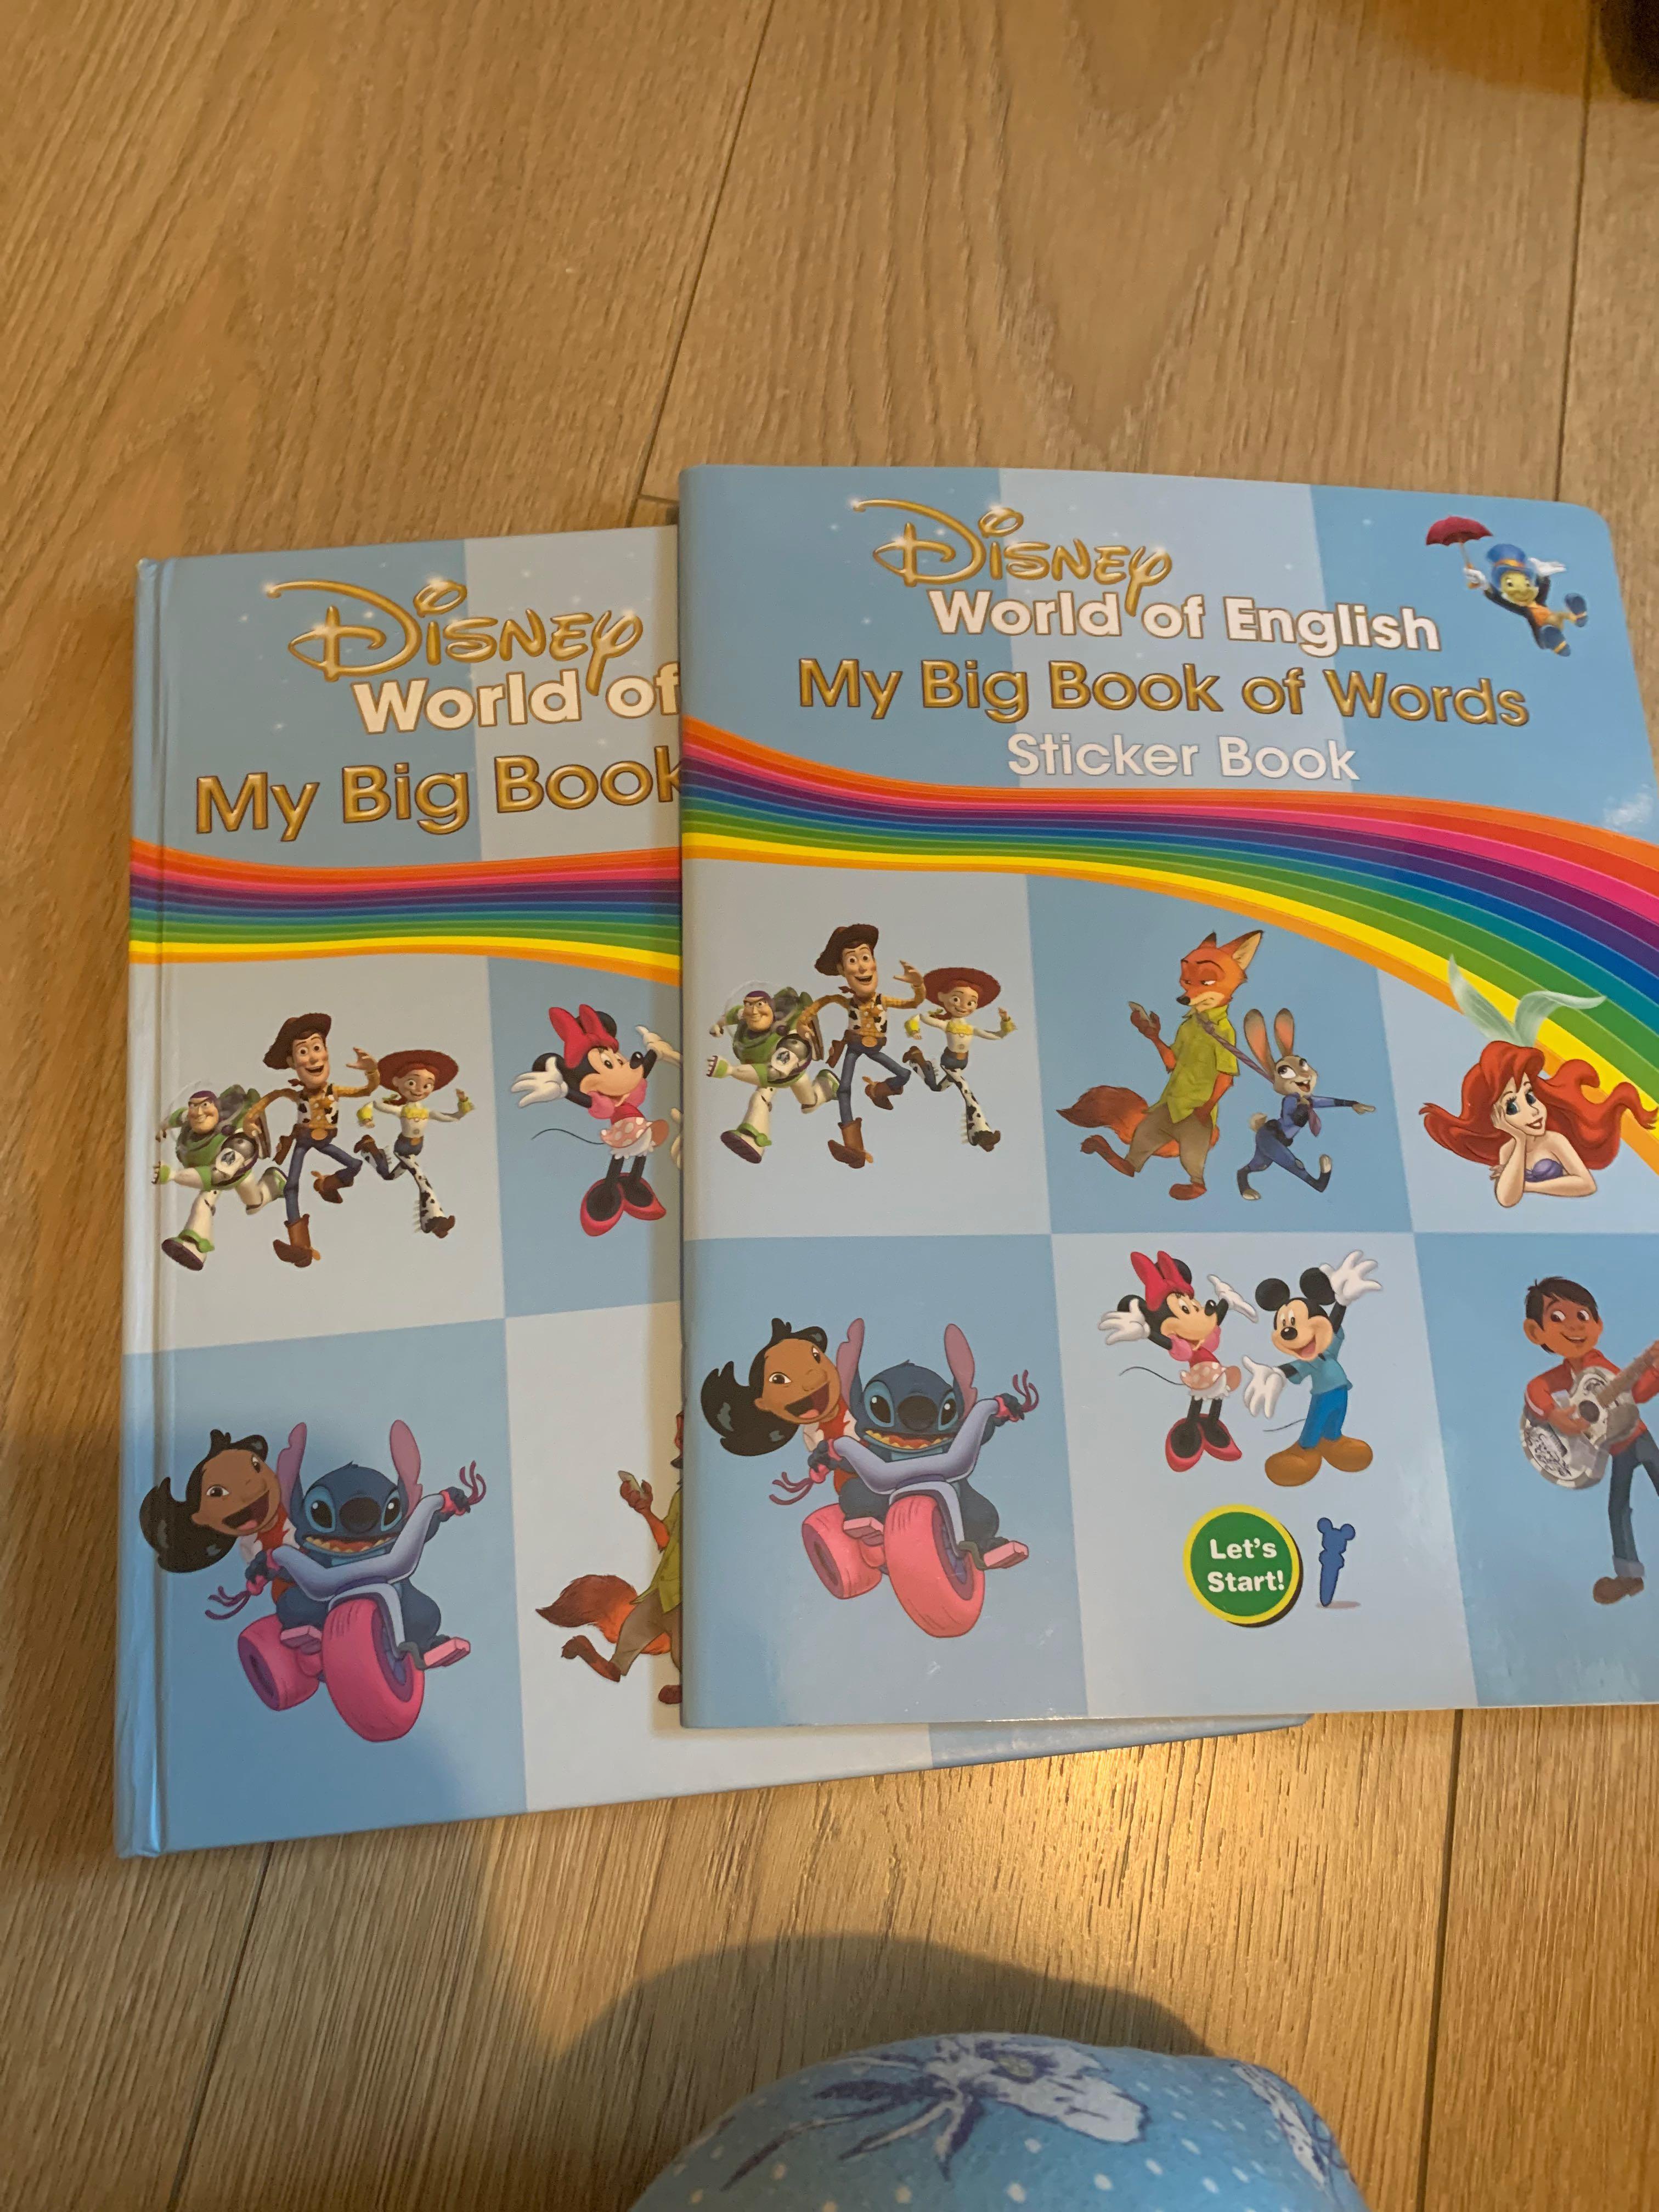 DWE 最新版Disney world of English my big book of words, 兒童＆孕婦 